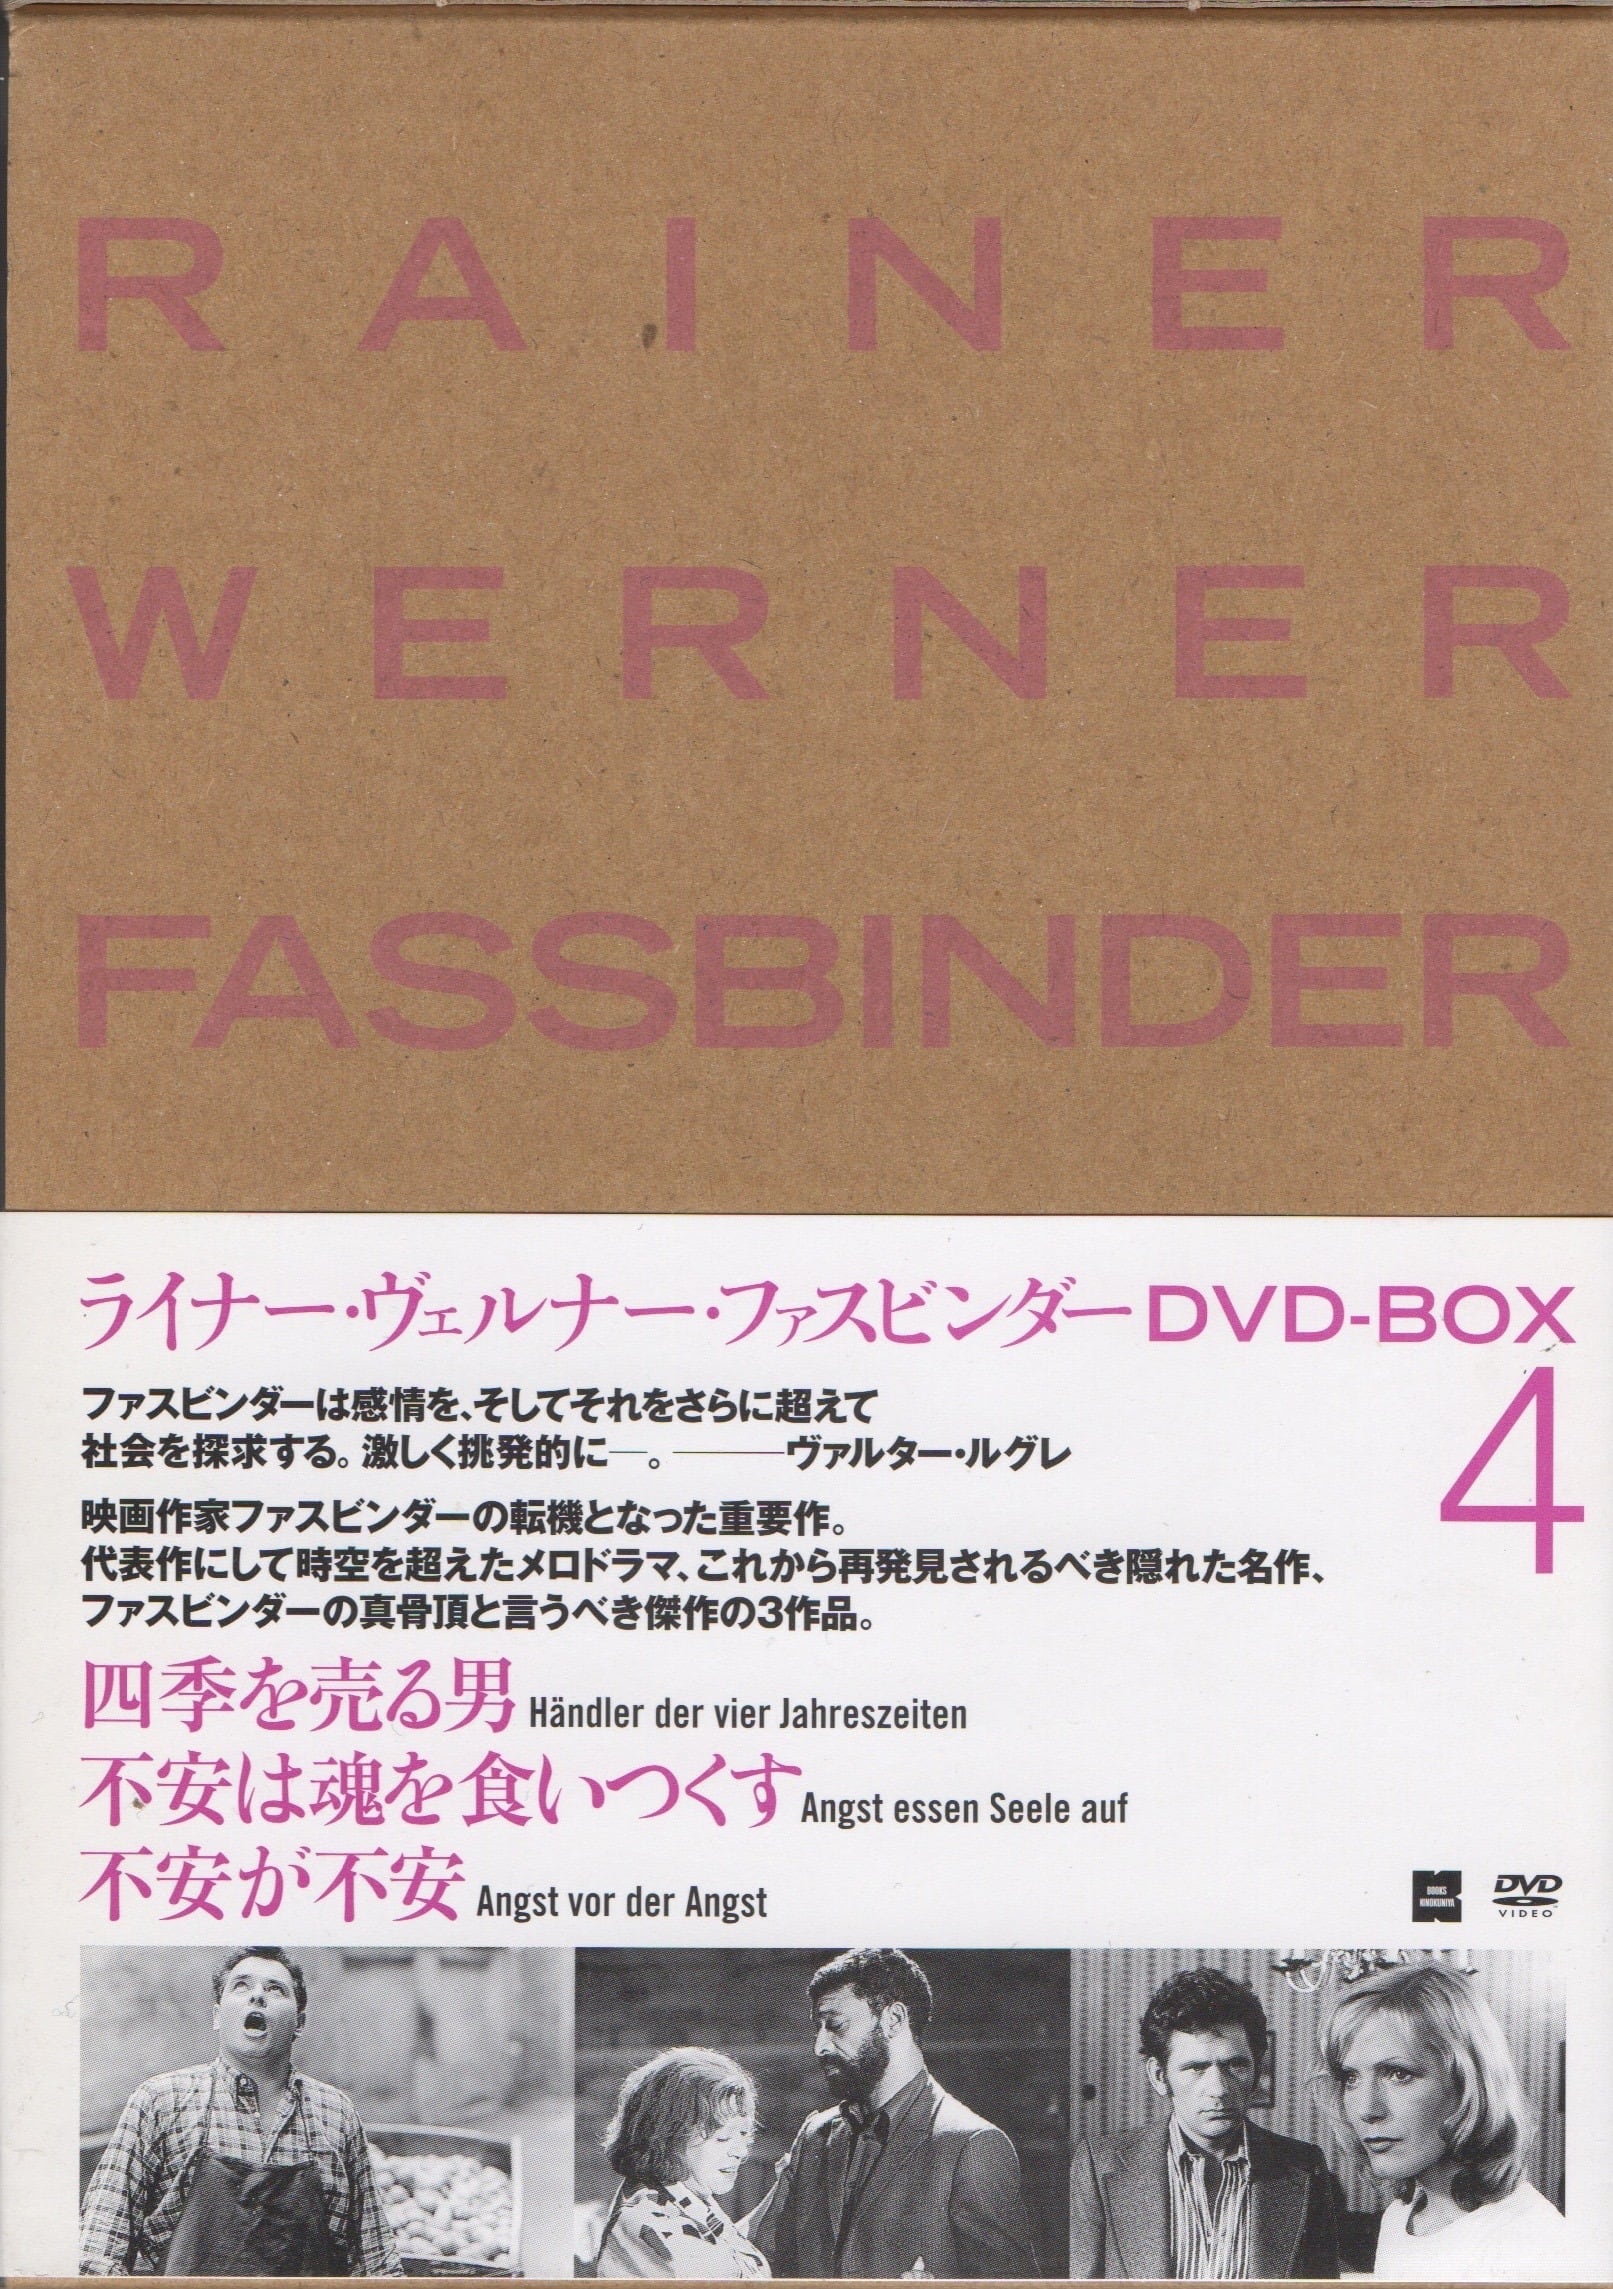 DVD-BOX】R・W・ファスビンダー監督 / DVD-BOX 4 | COMPACT DISCO ASIA